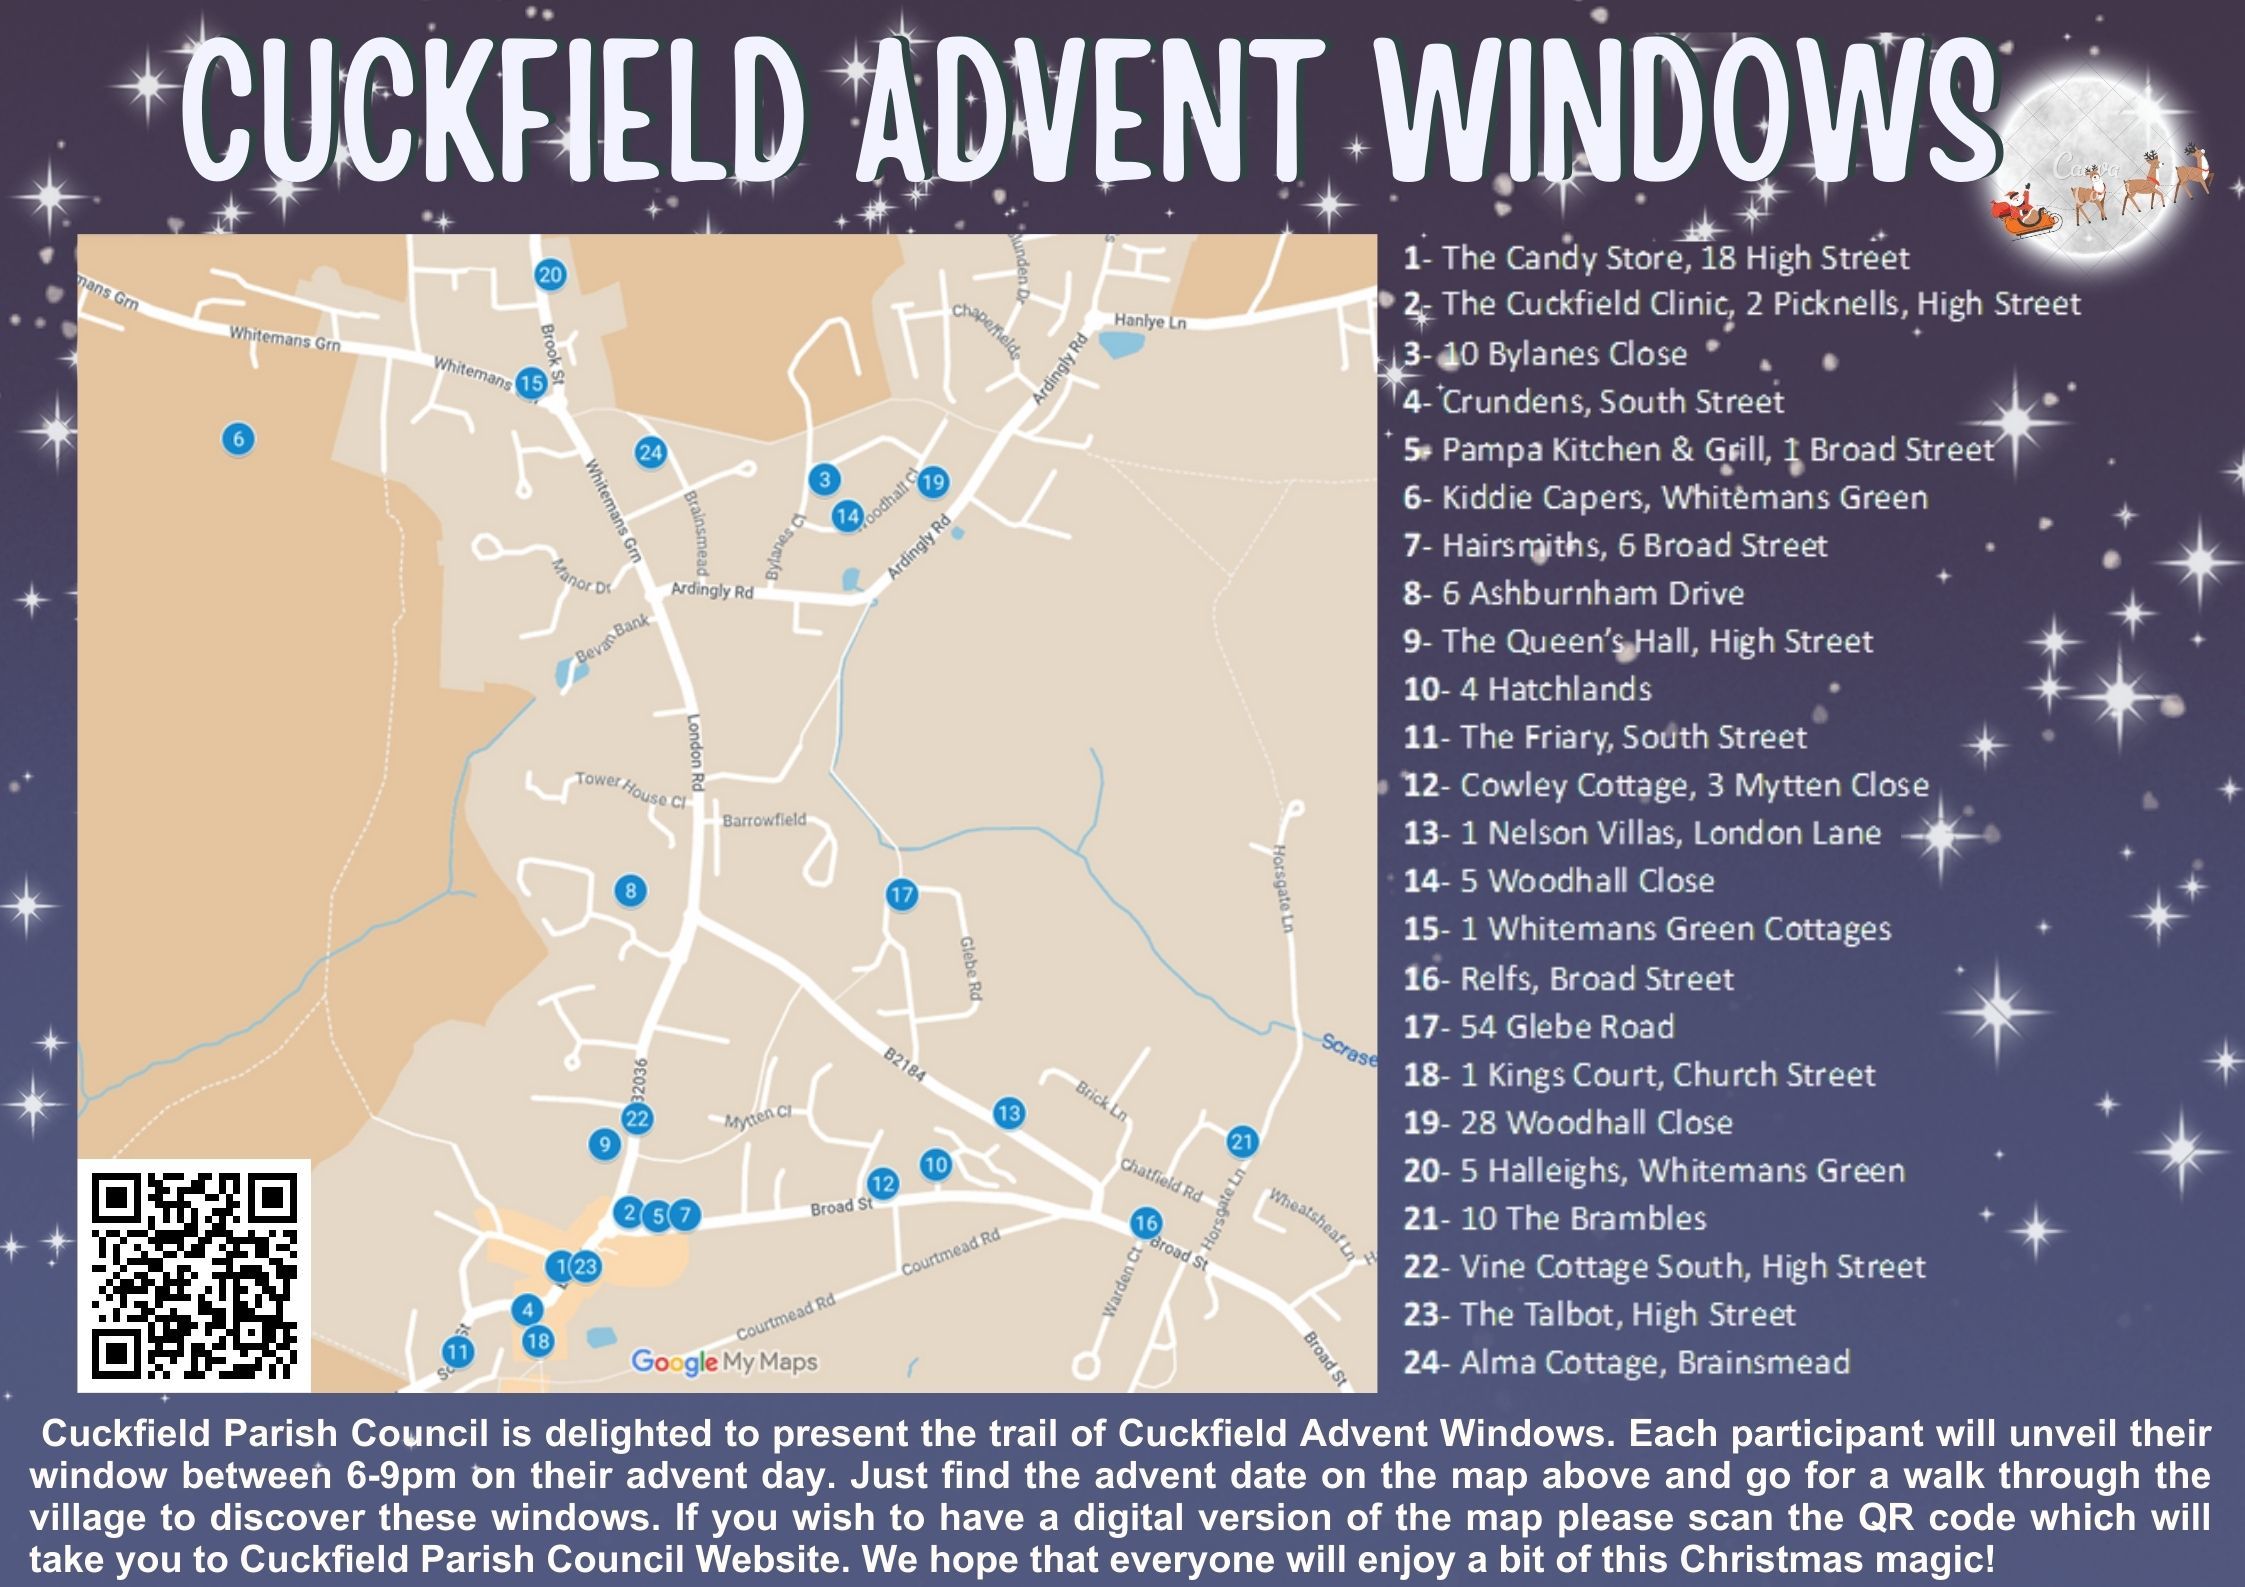 Cuckfield Advent Windows Trail Map